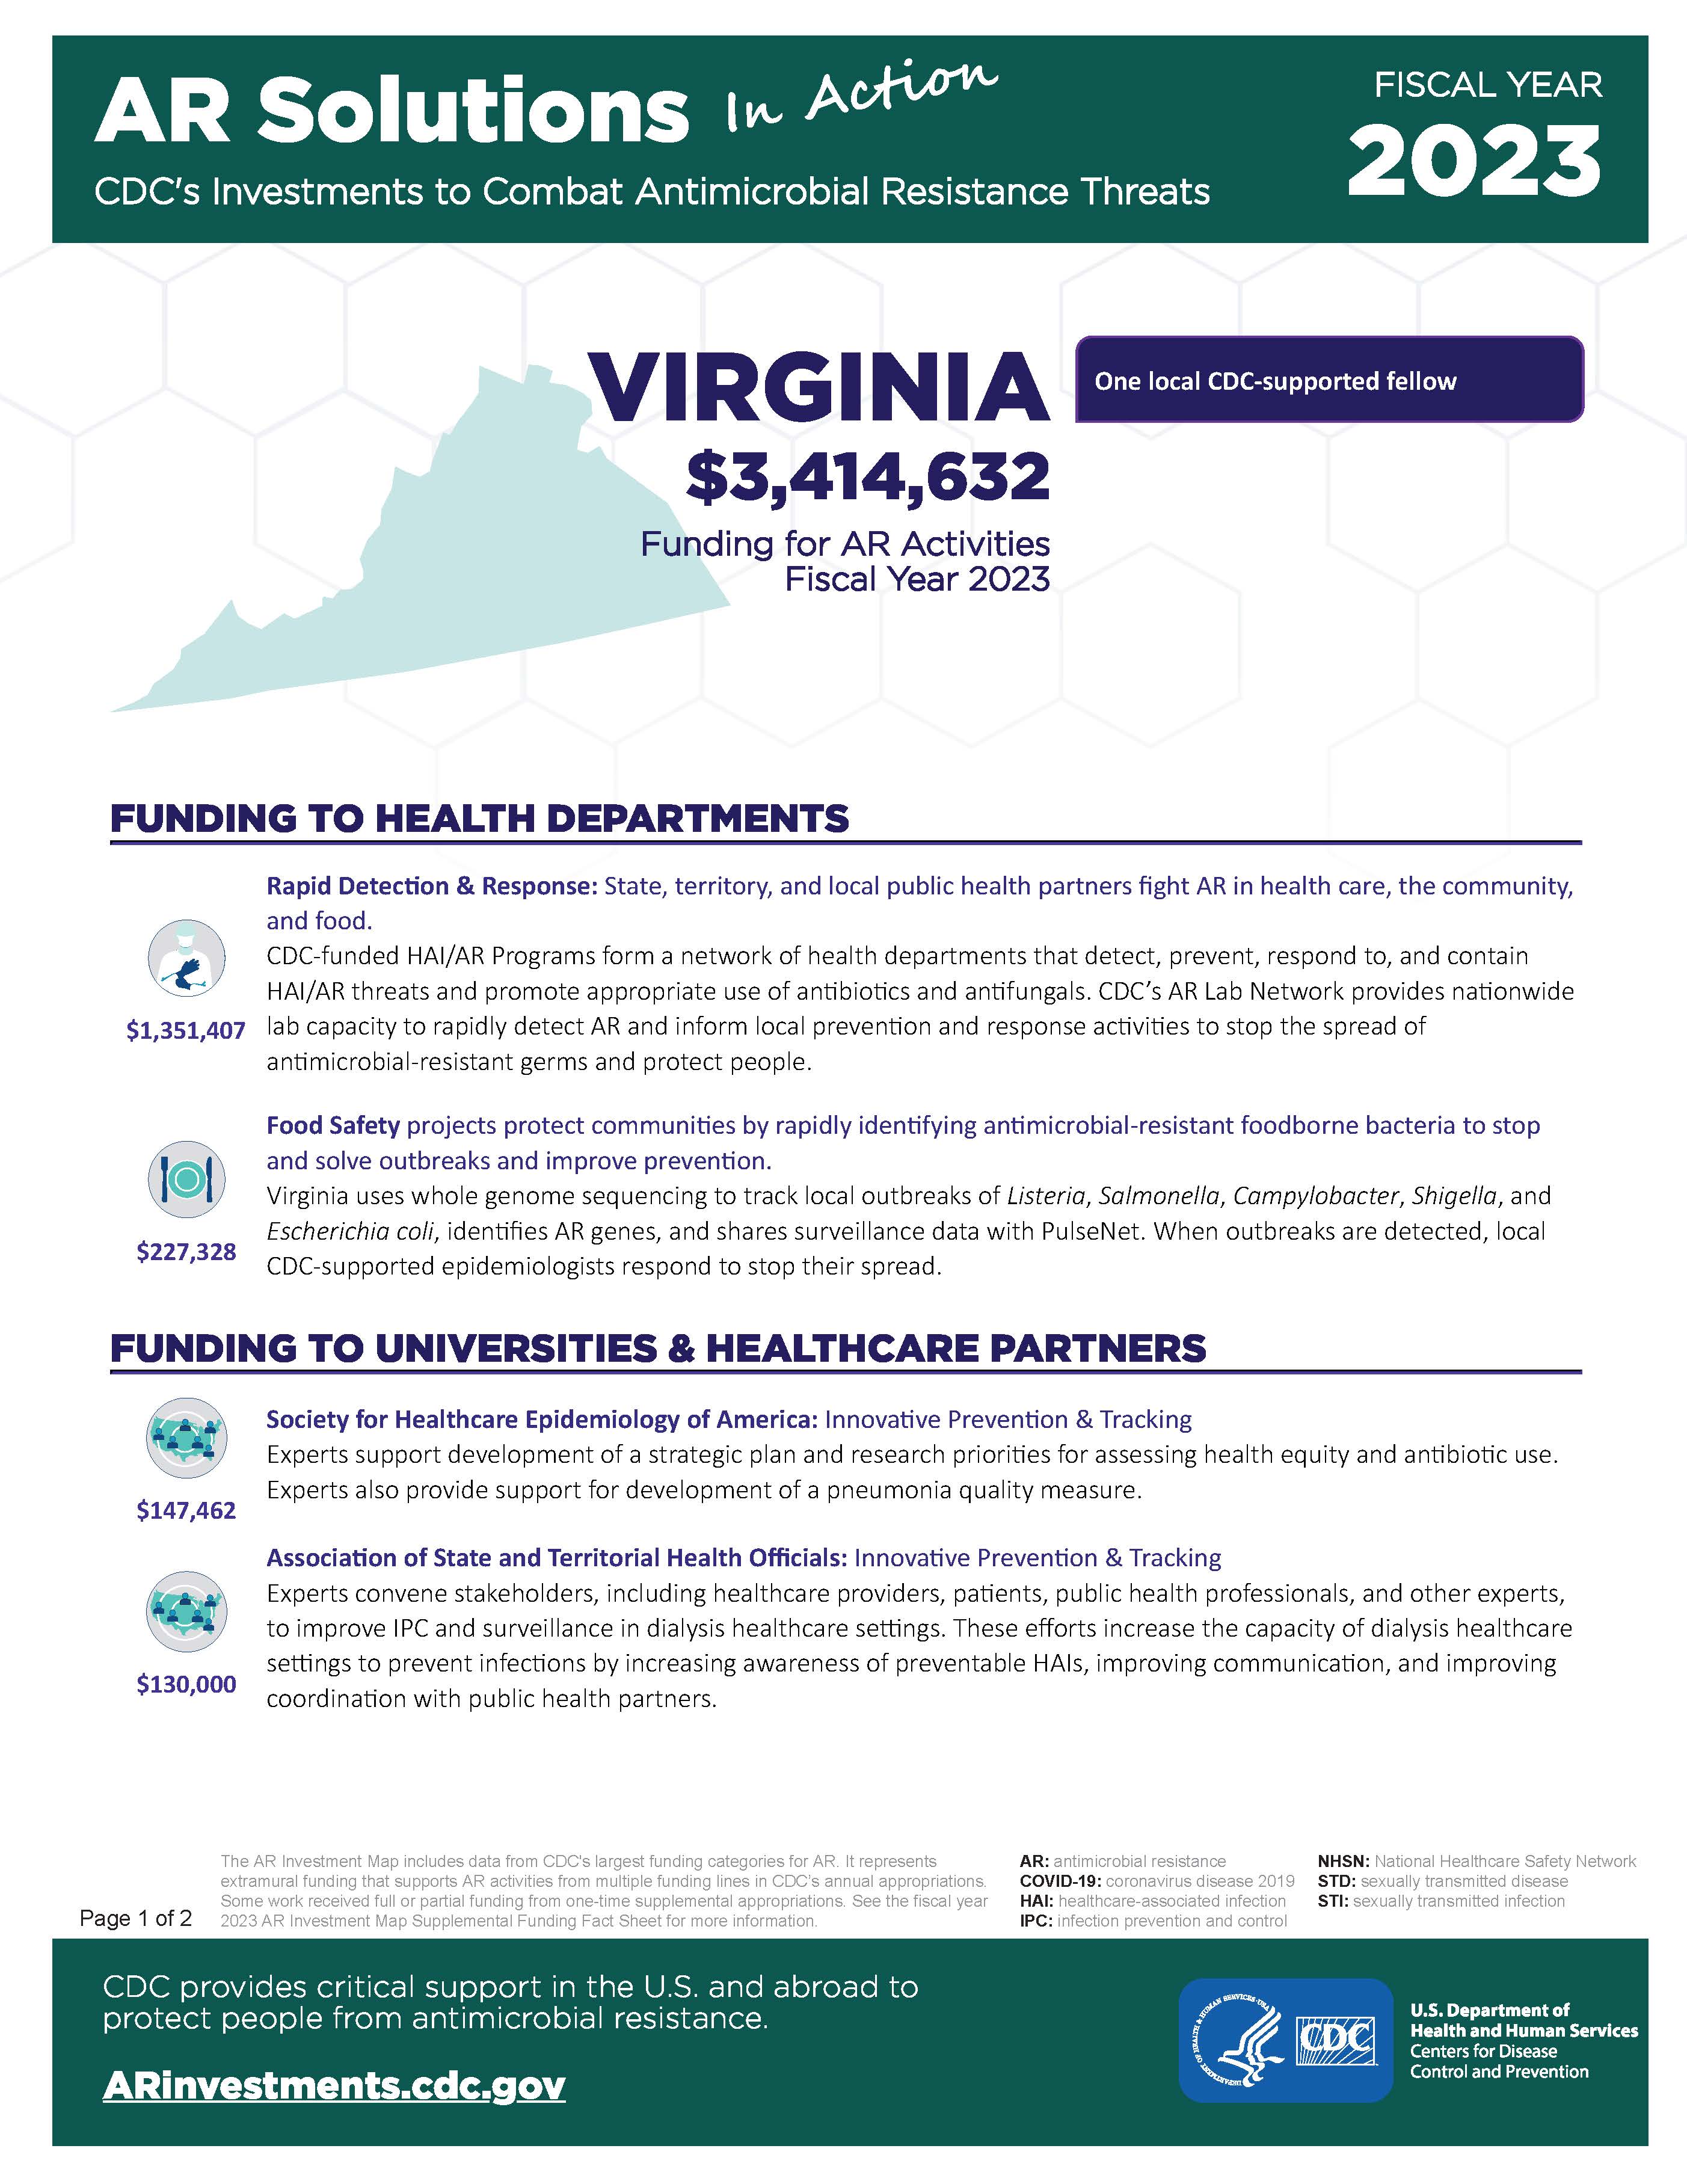 View Factsheet for Virginia